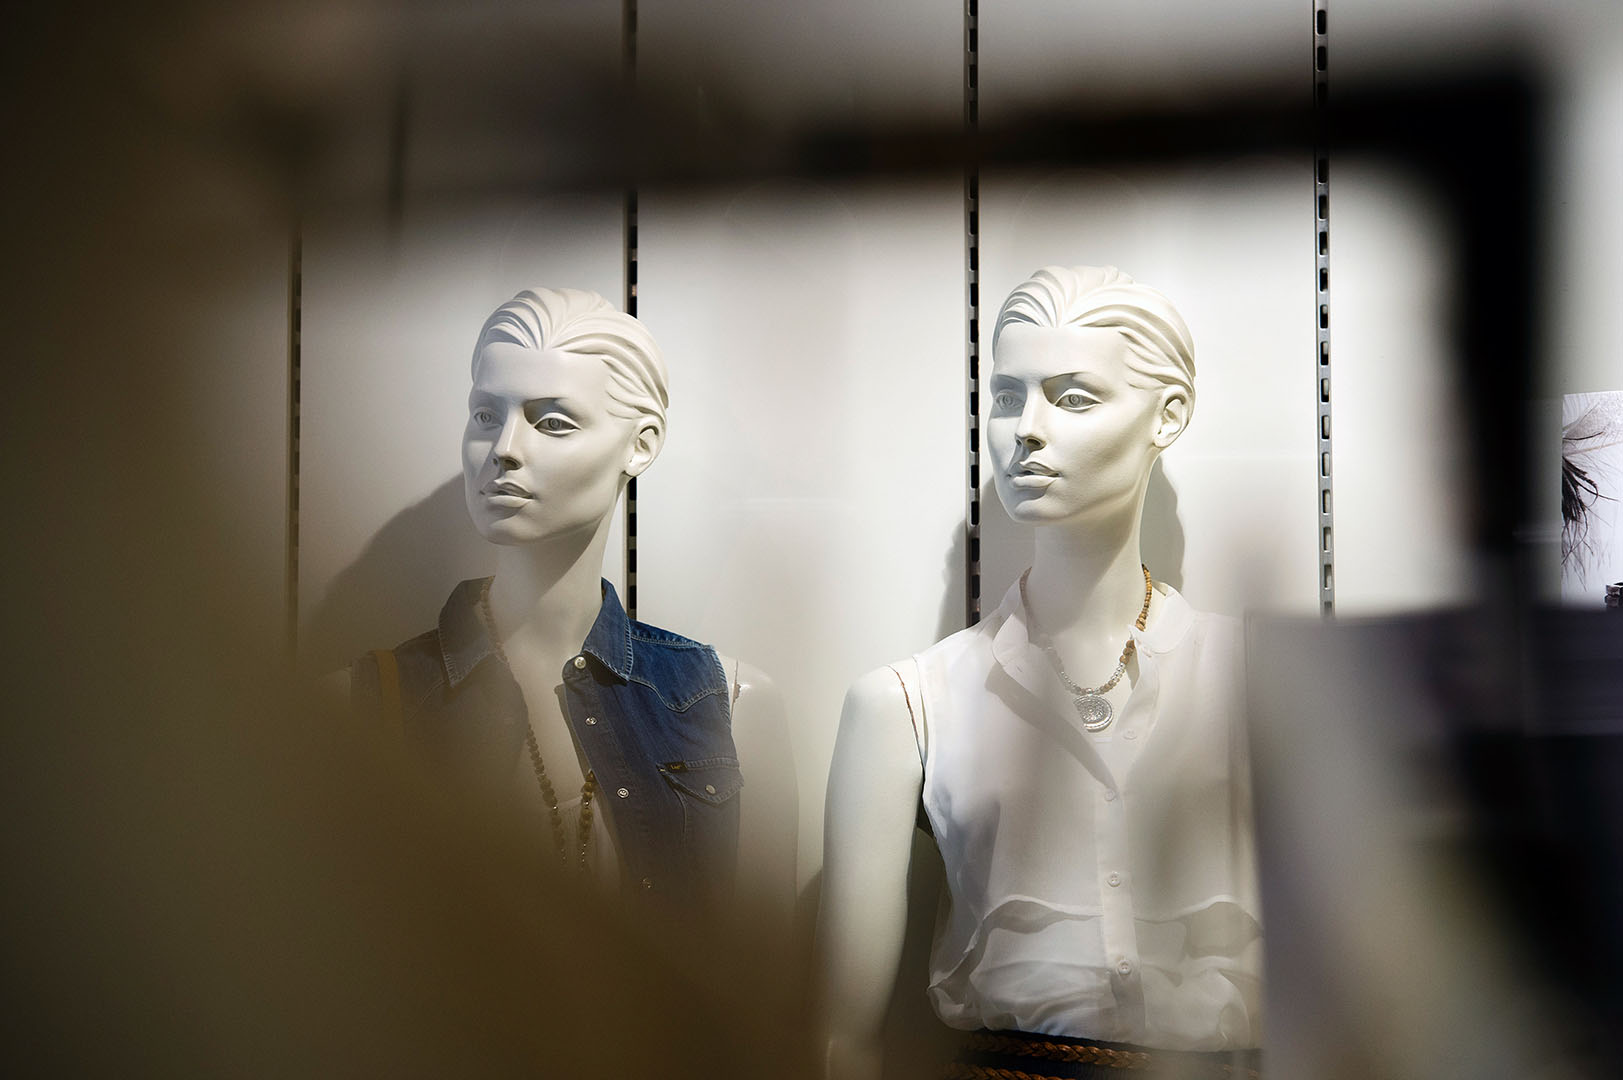 Shop mannequins coming into focus